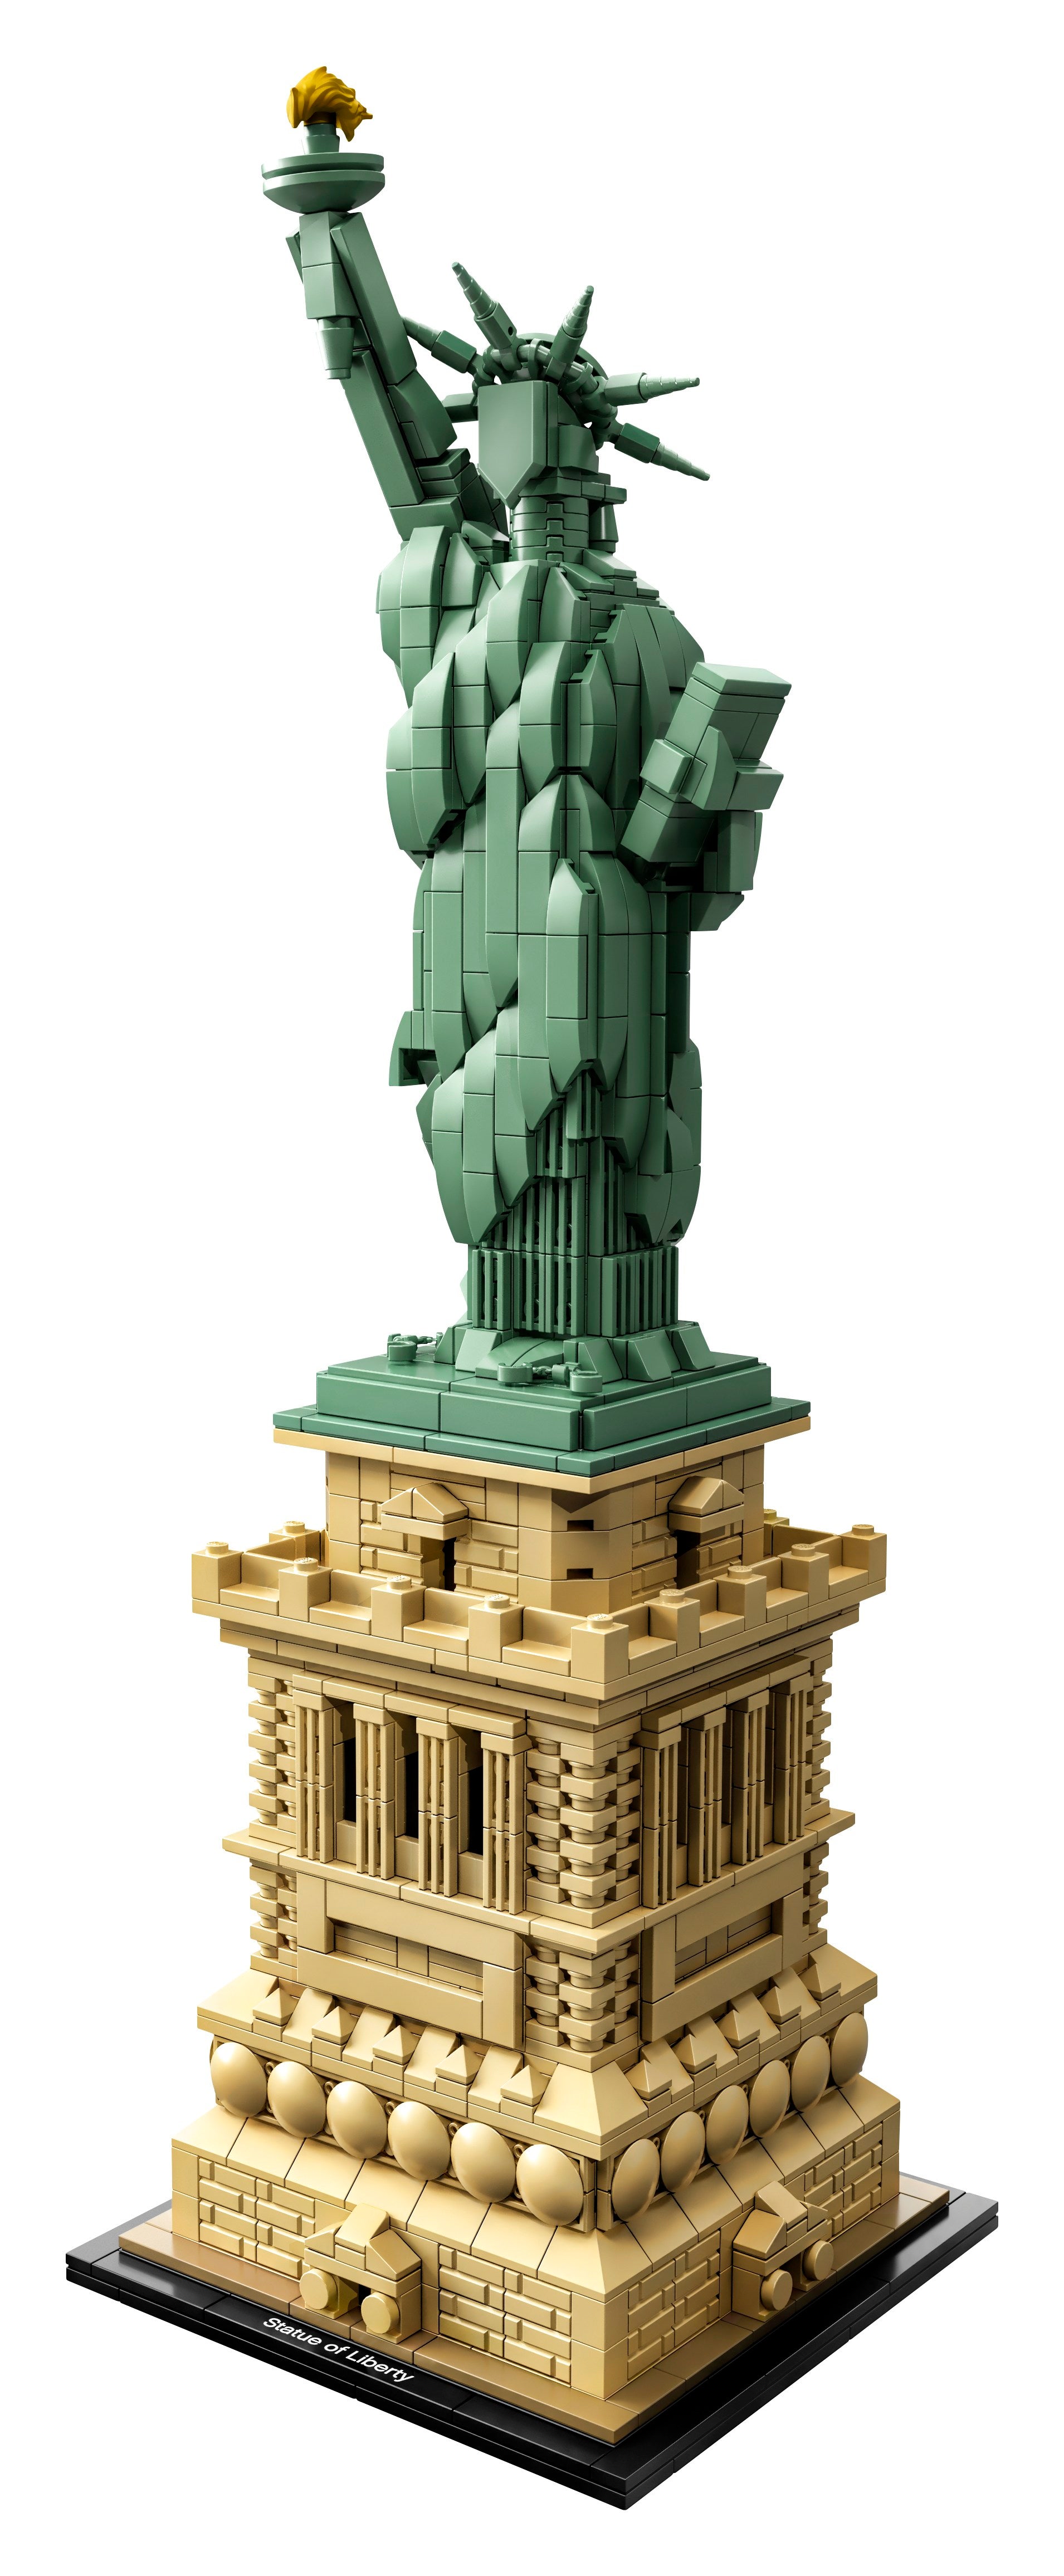 LEGO Architecture Statue of Liberty - 21042